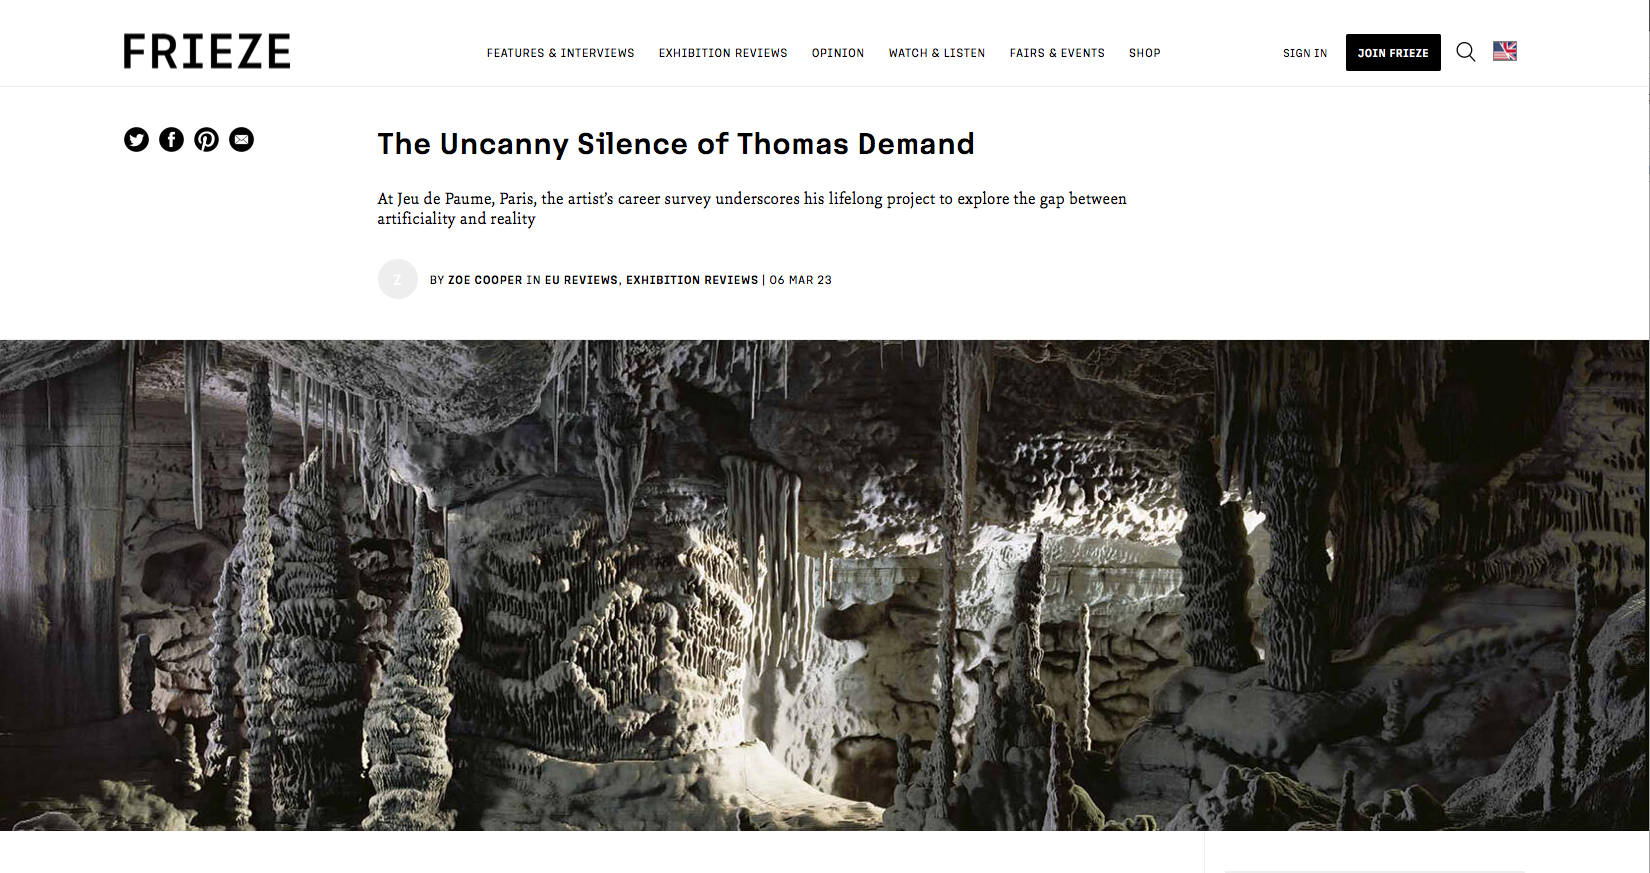 The Uncanny Silence of Thomas Demand